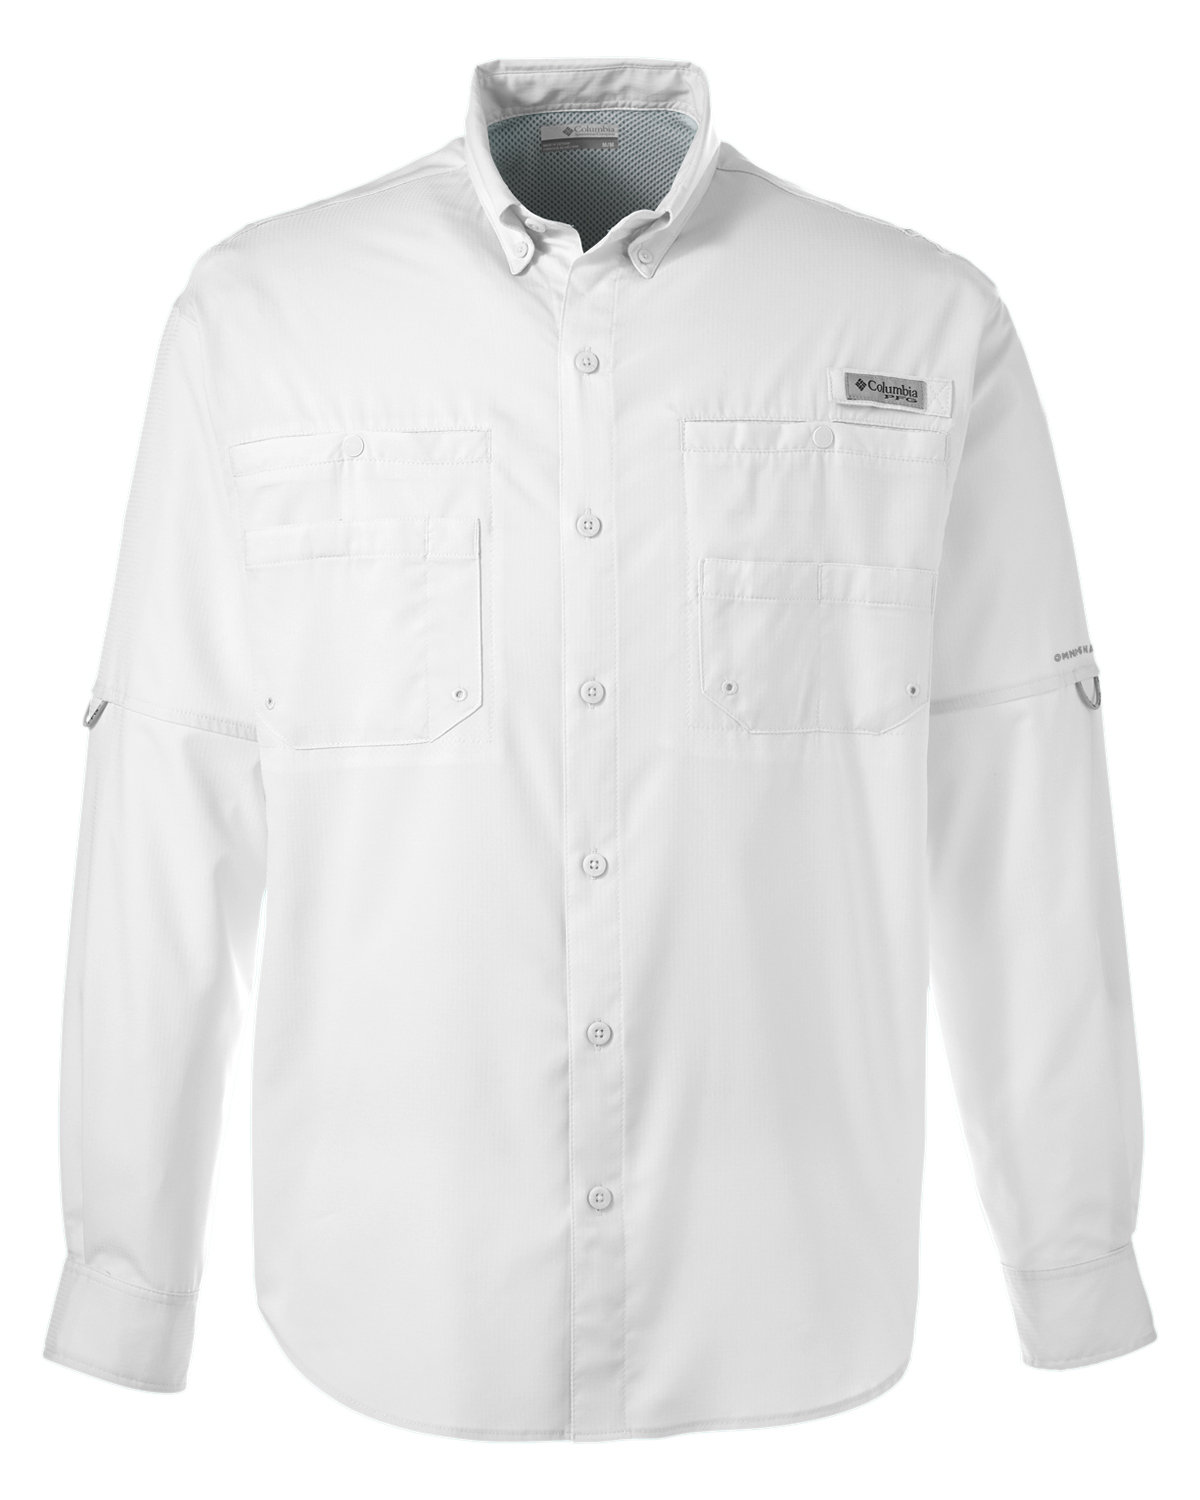 Men’s PFG Tamiami™ II Long Sleeve Shirt